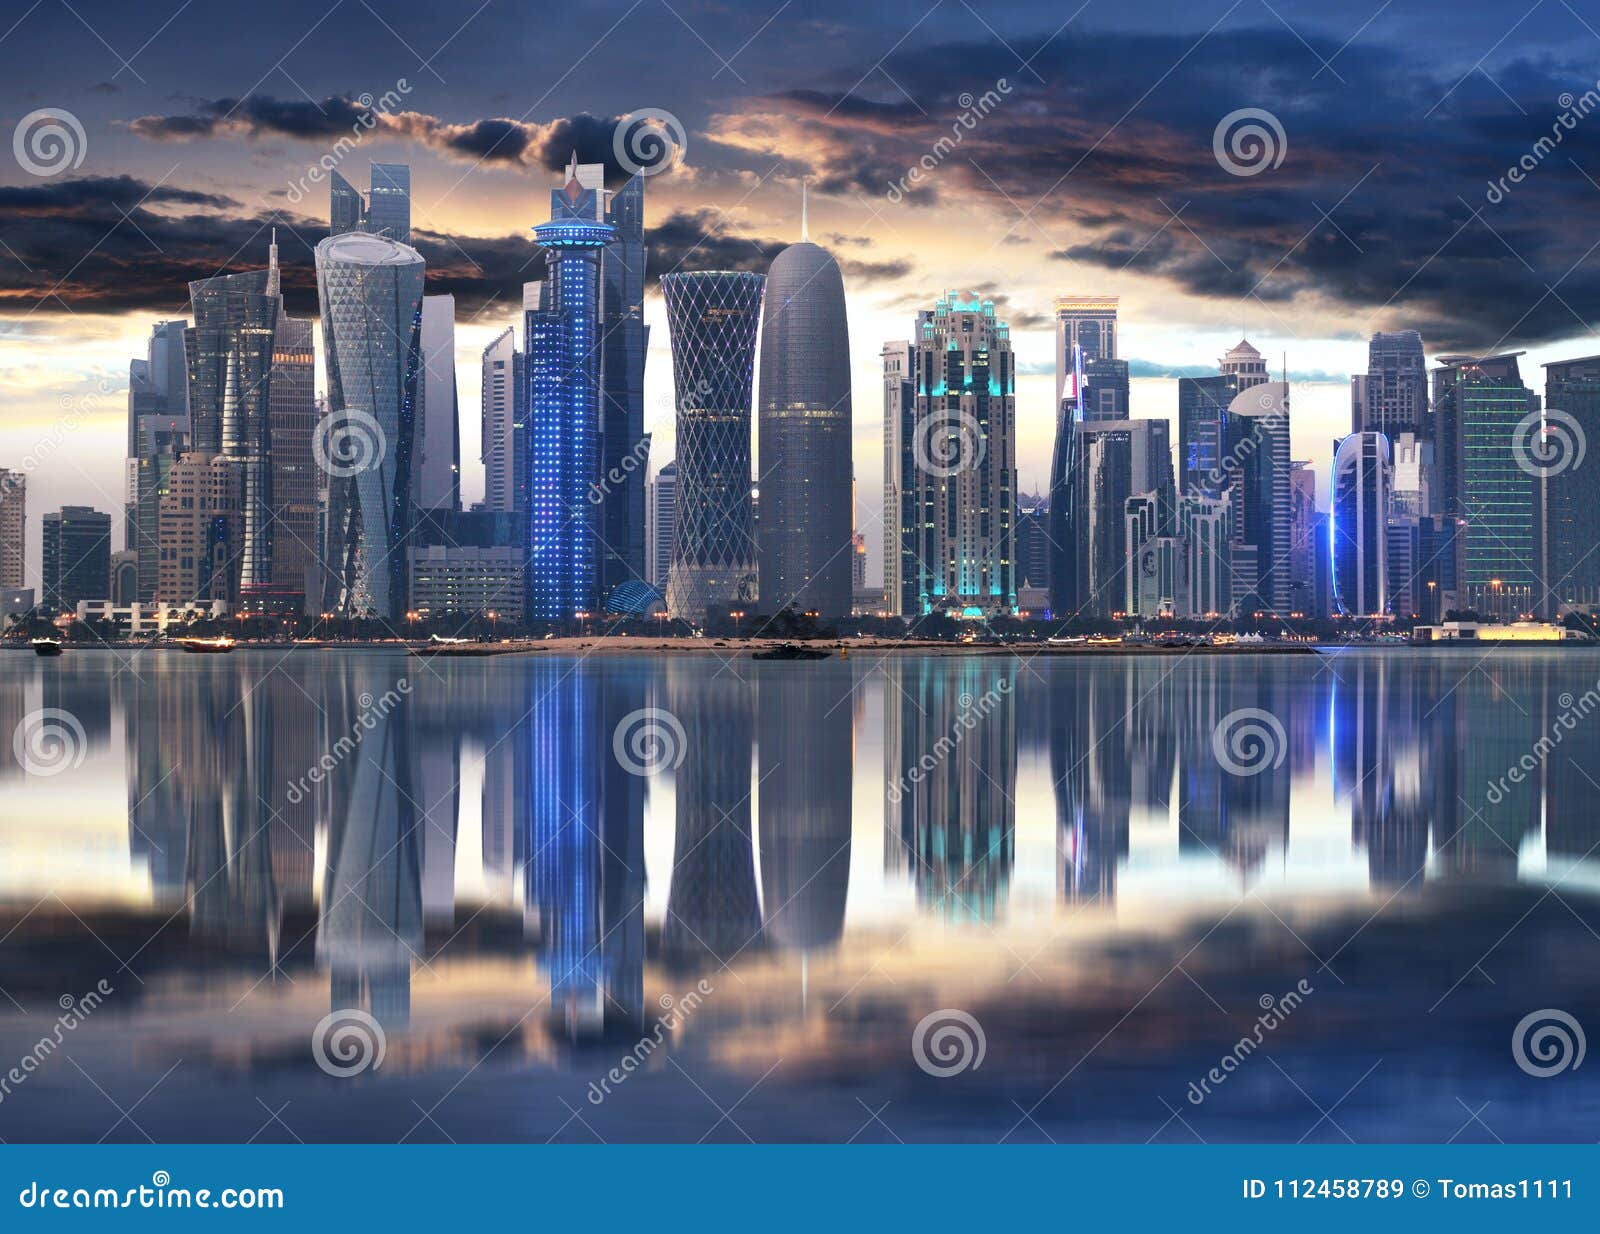 doha city skyline city center at night, qatar